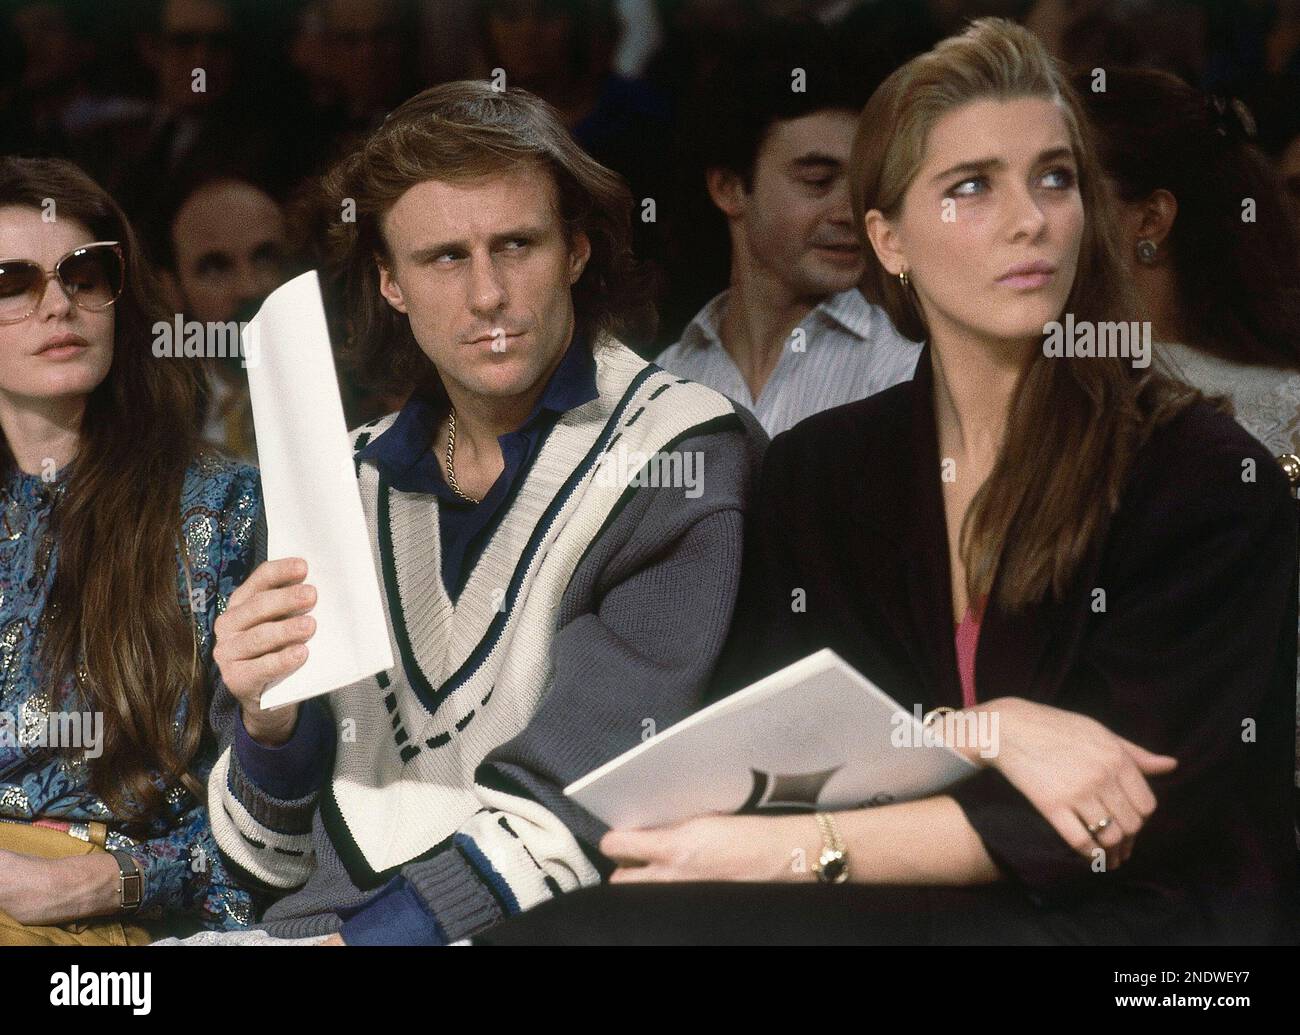 Former tennis star fashion designer Bjorn Borg is shown with his 17-year-old Jannike Bjorling as they attend his men's wear fashion show in Paris, Feb. 2, 1985. (AP Photo/Pierre Gleizes